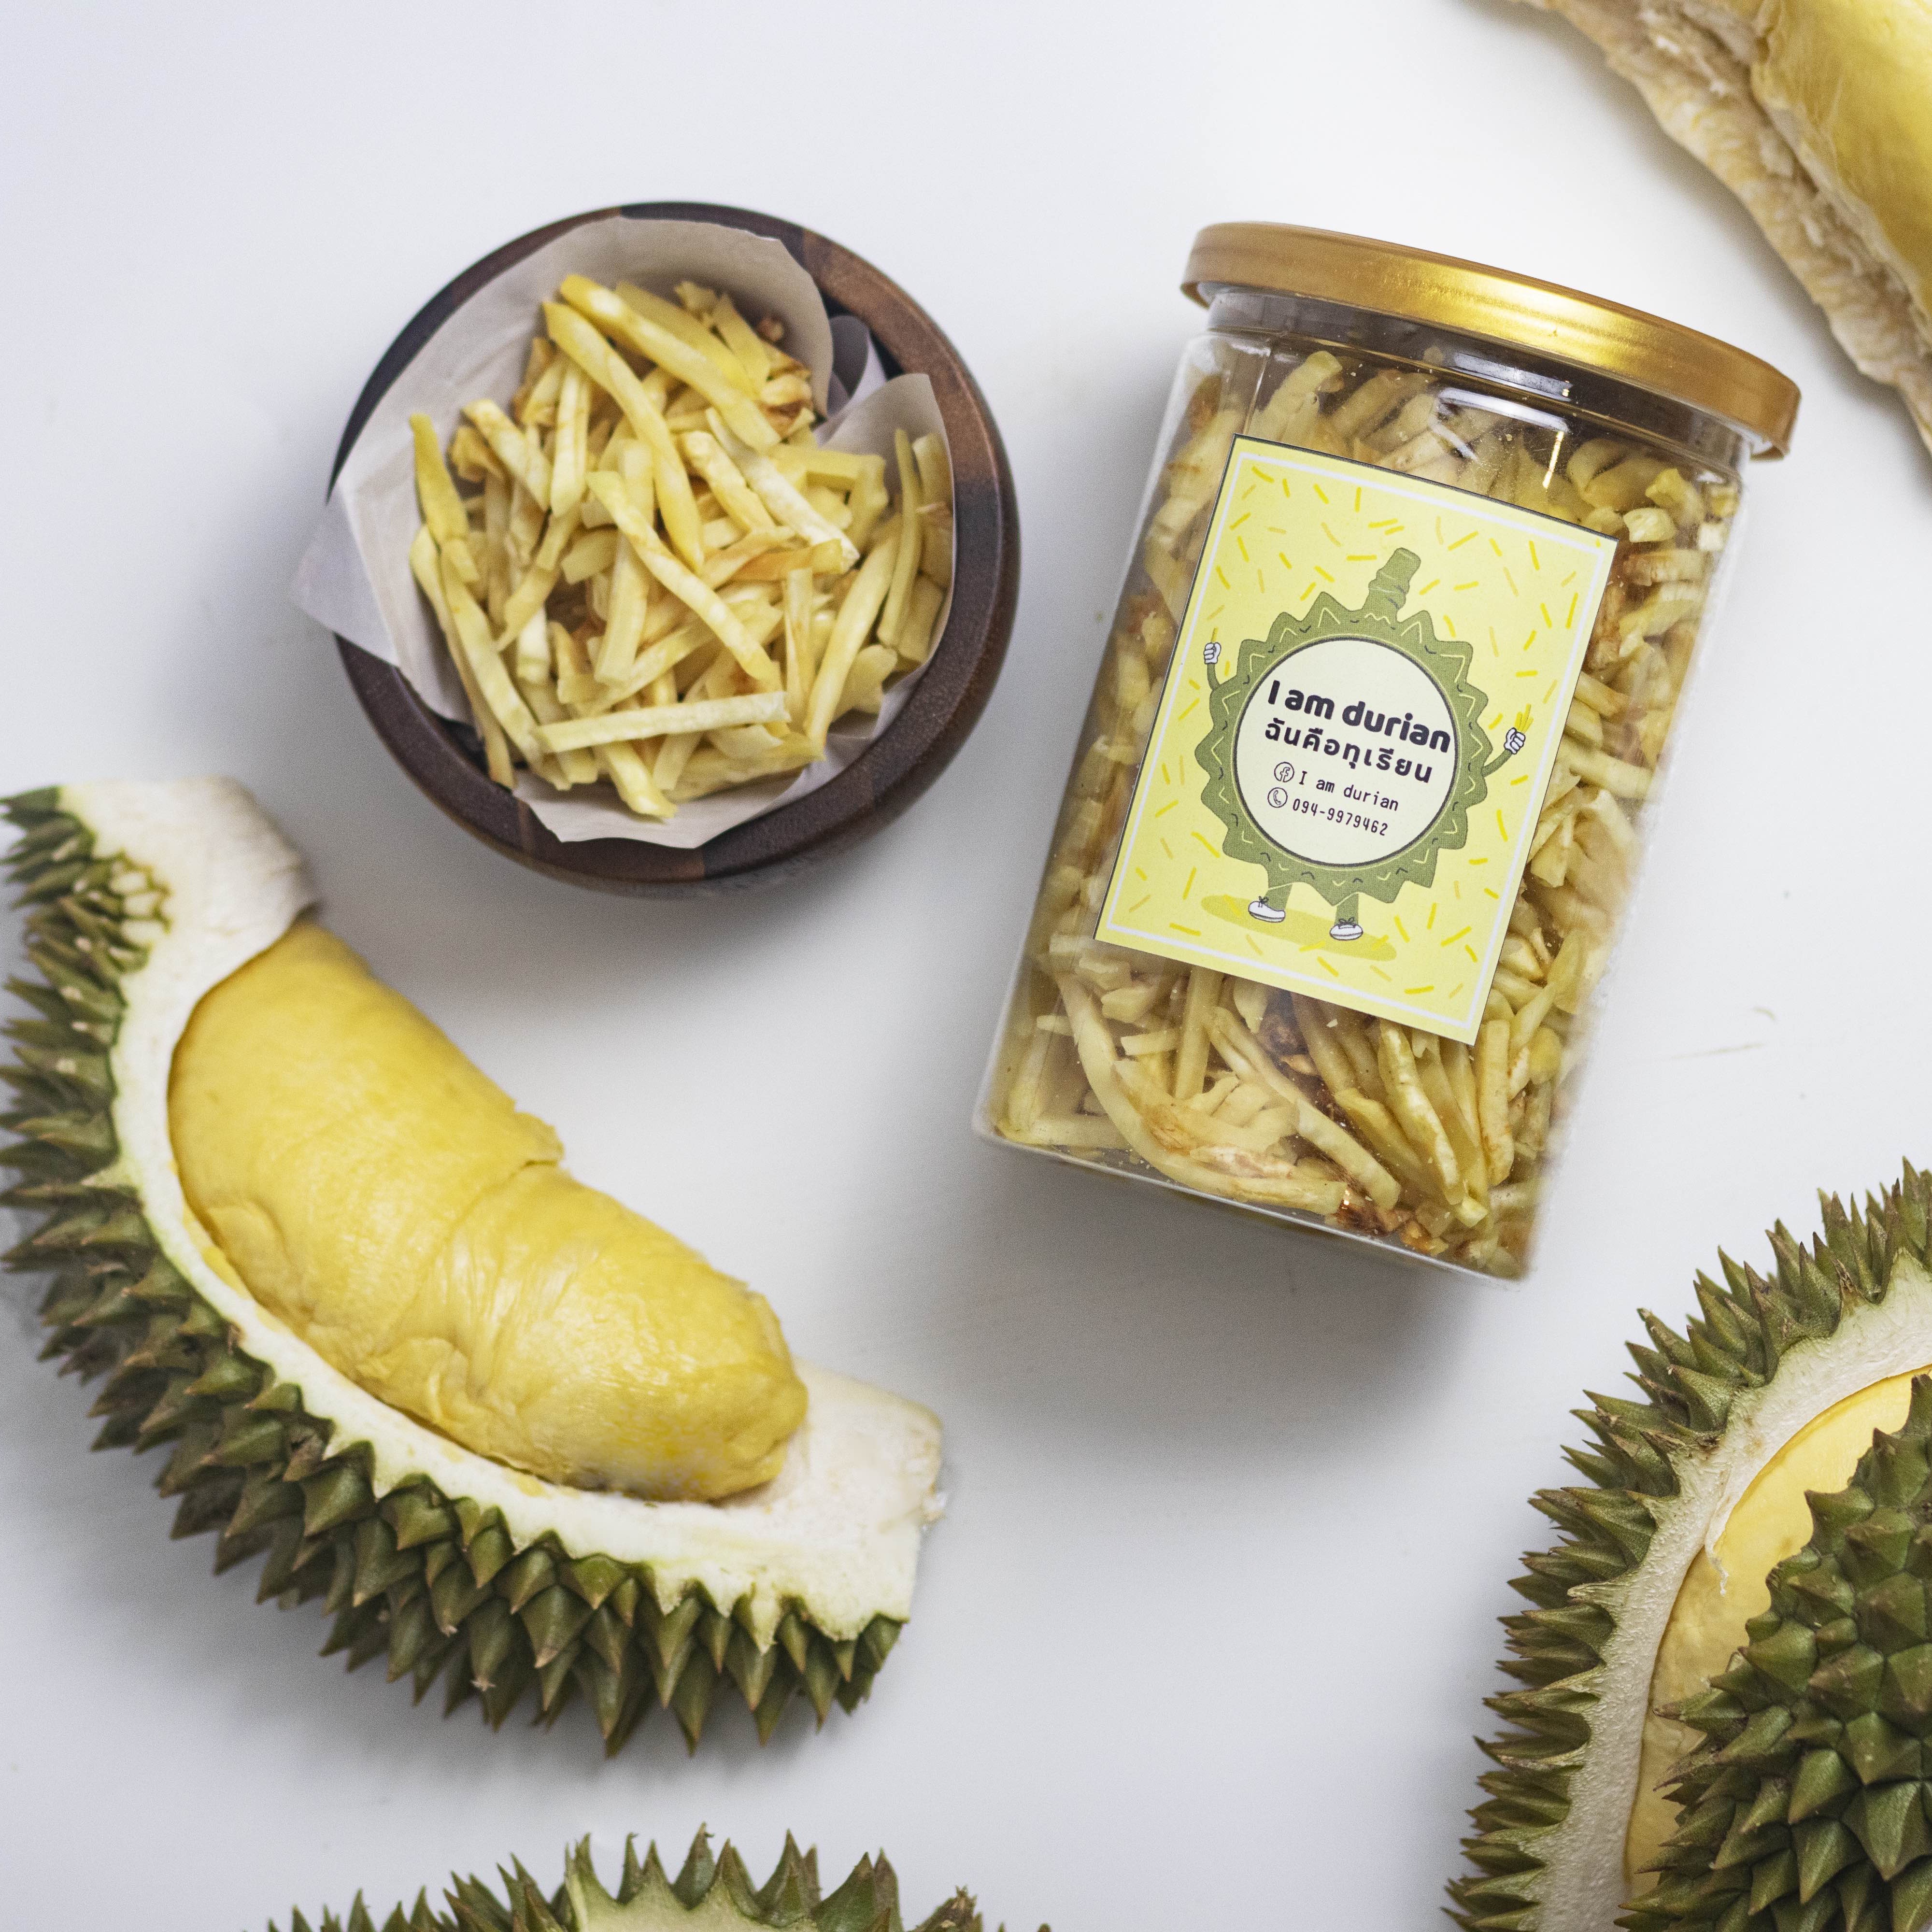 I Am Durian ทุเรียน เฟรนช์ฟราย - ทุเรียนทอด อ้วนน้อย อร่อยหนัก